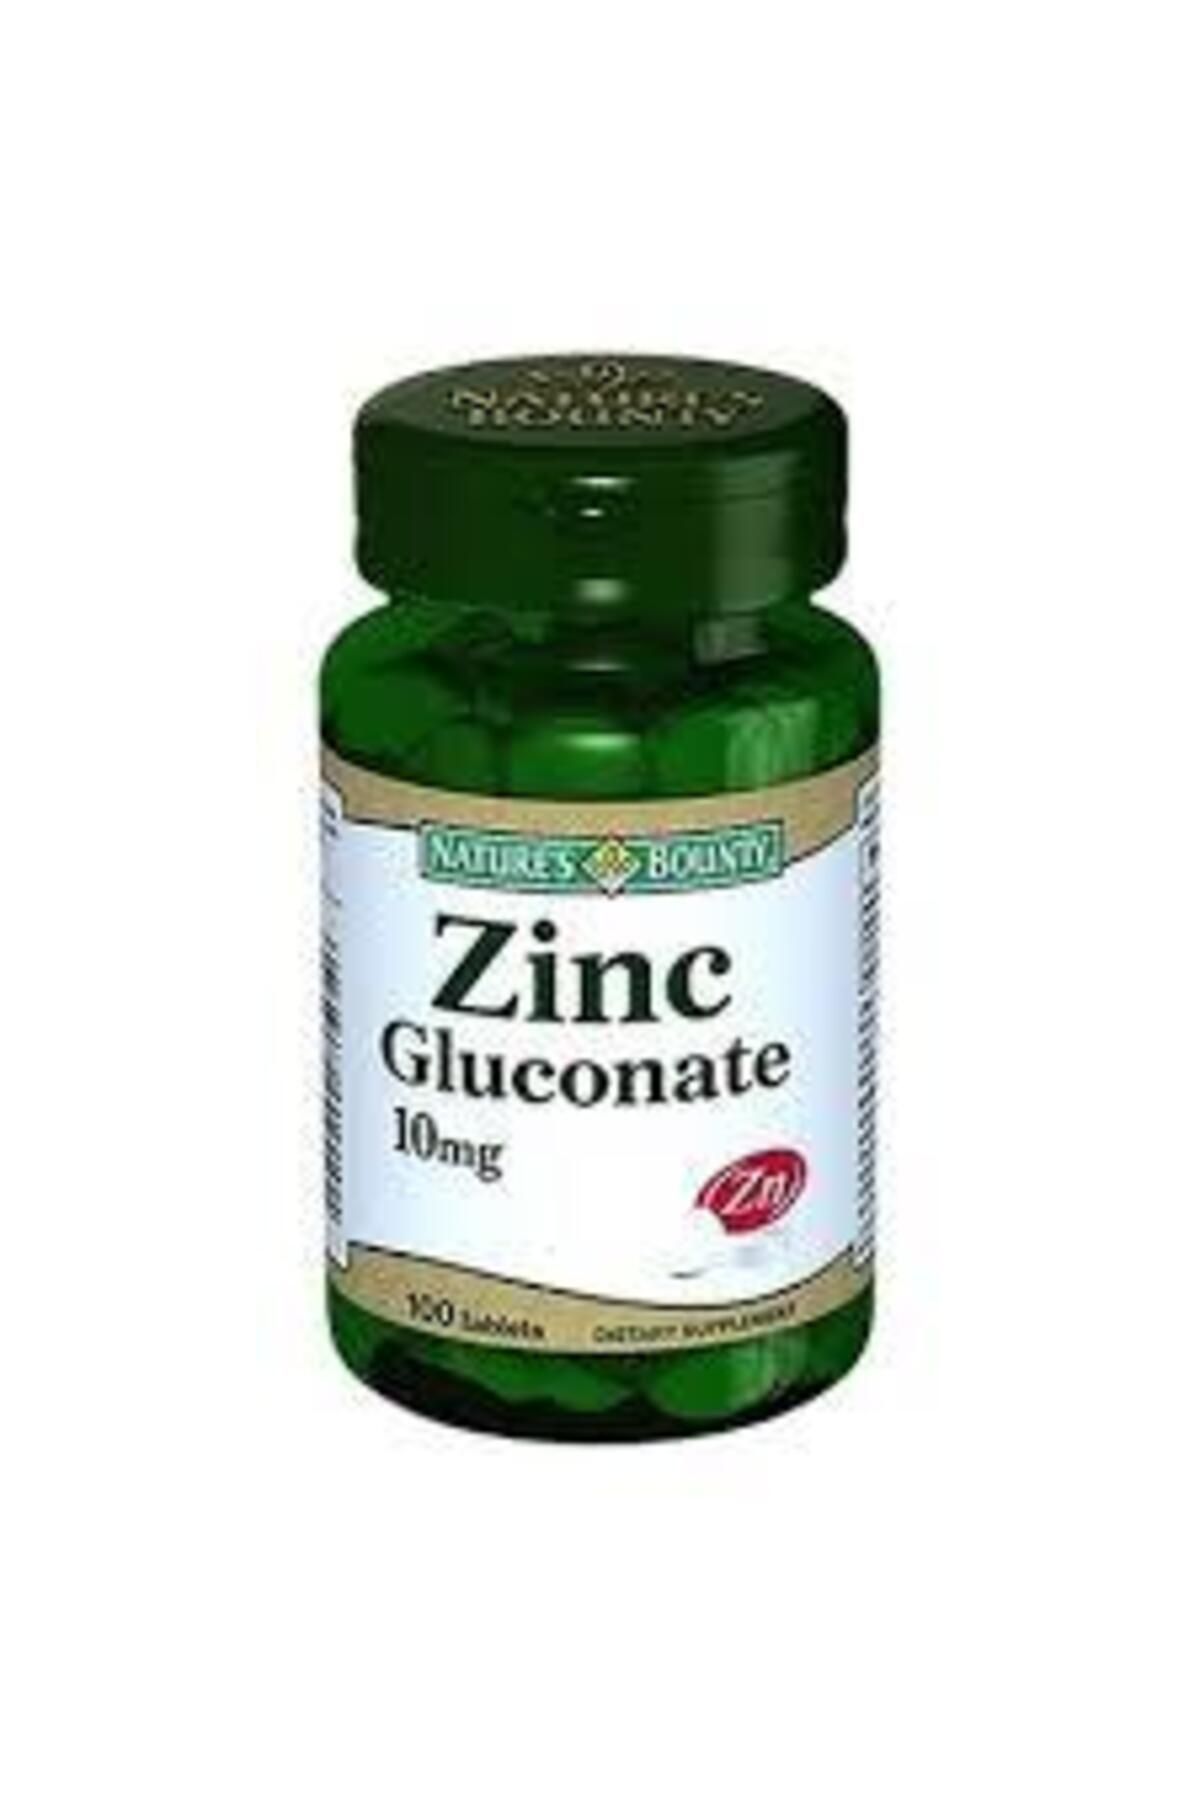 Natures Bounty - Zinc Gluconate 10 Mg 100 Tablet 074312010101